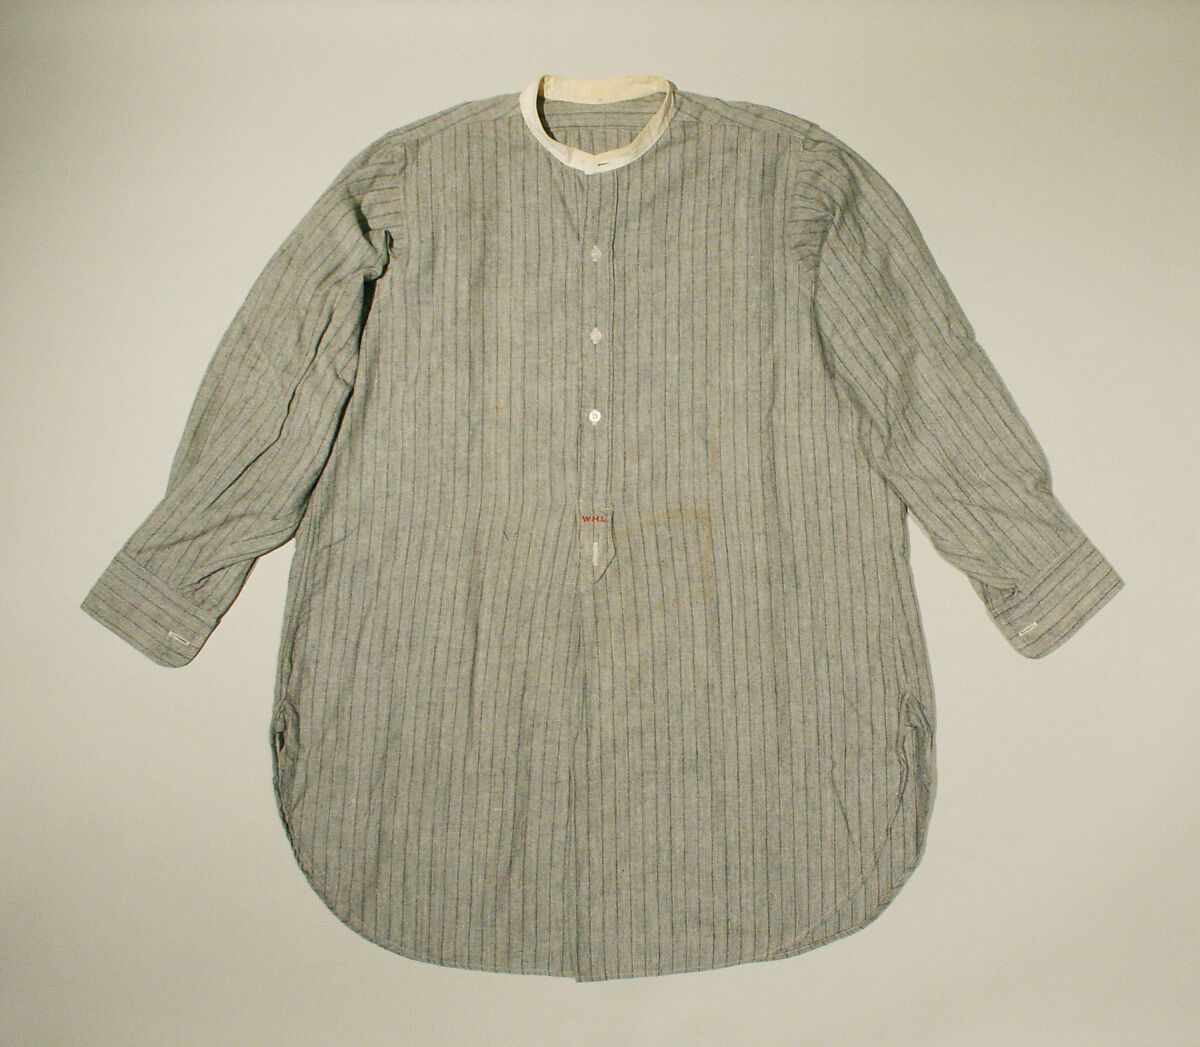 Shirt, linen, probably American 